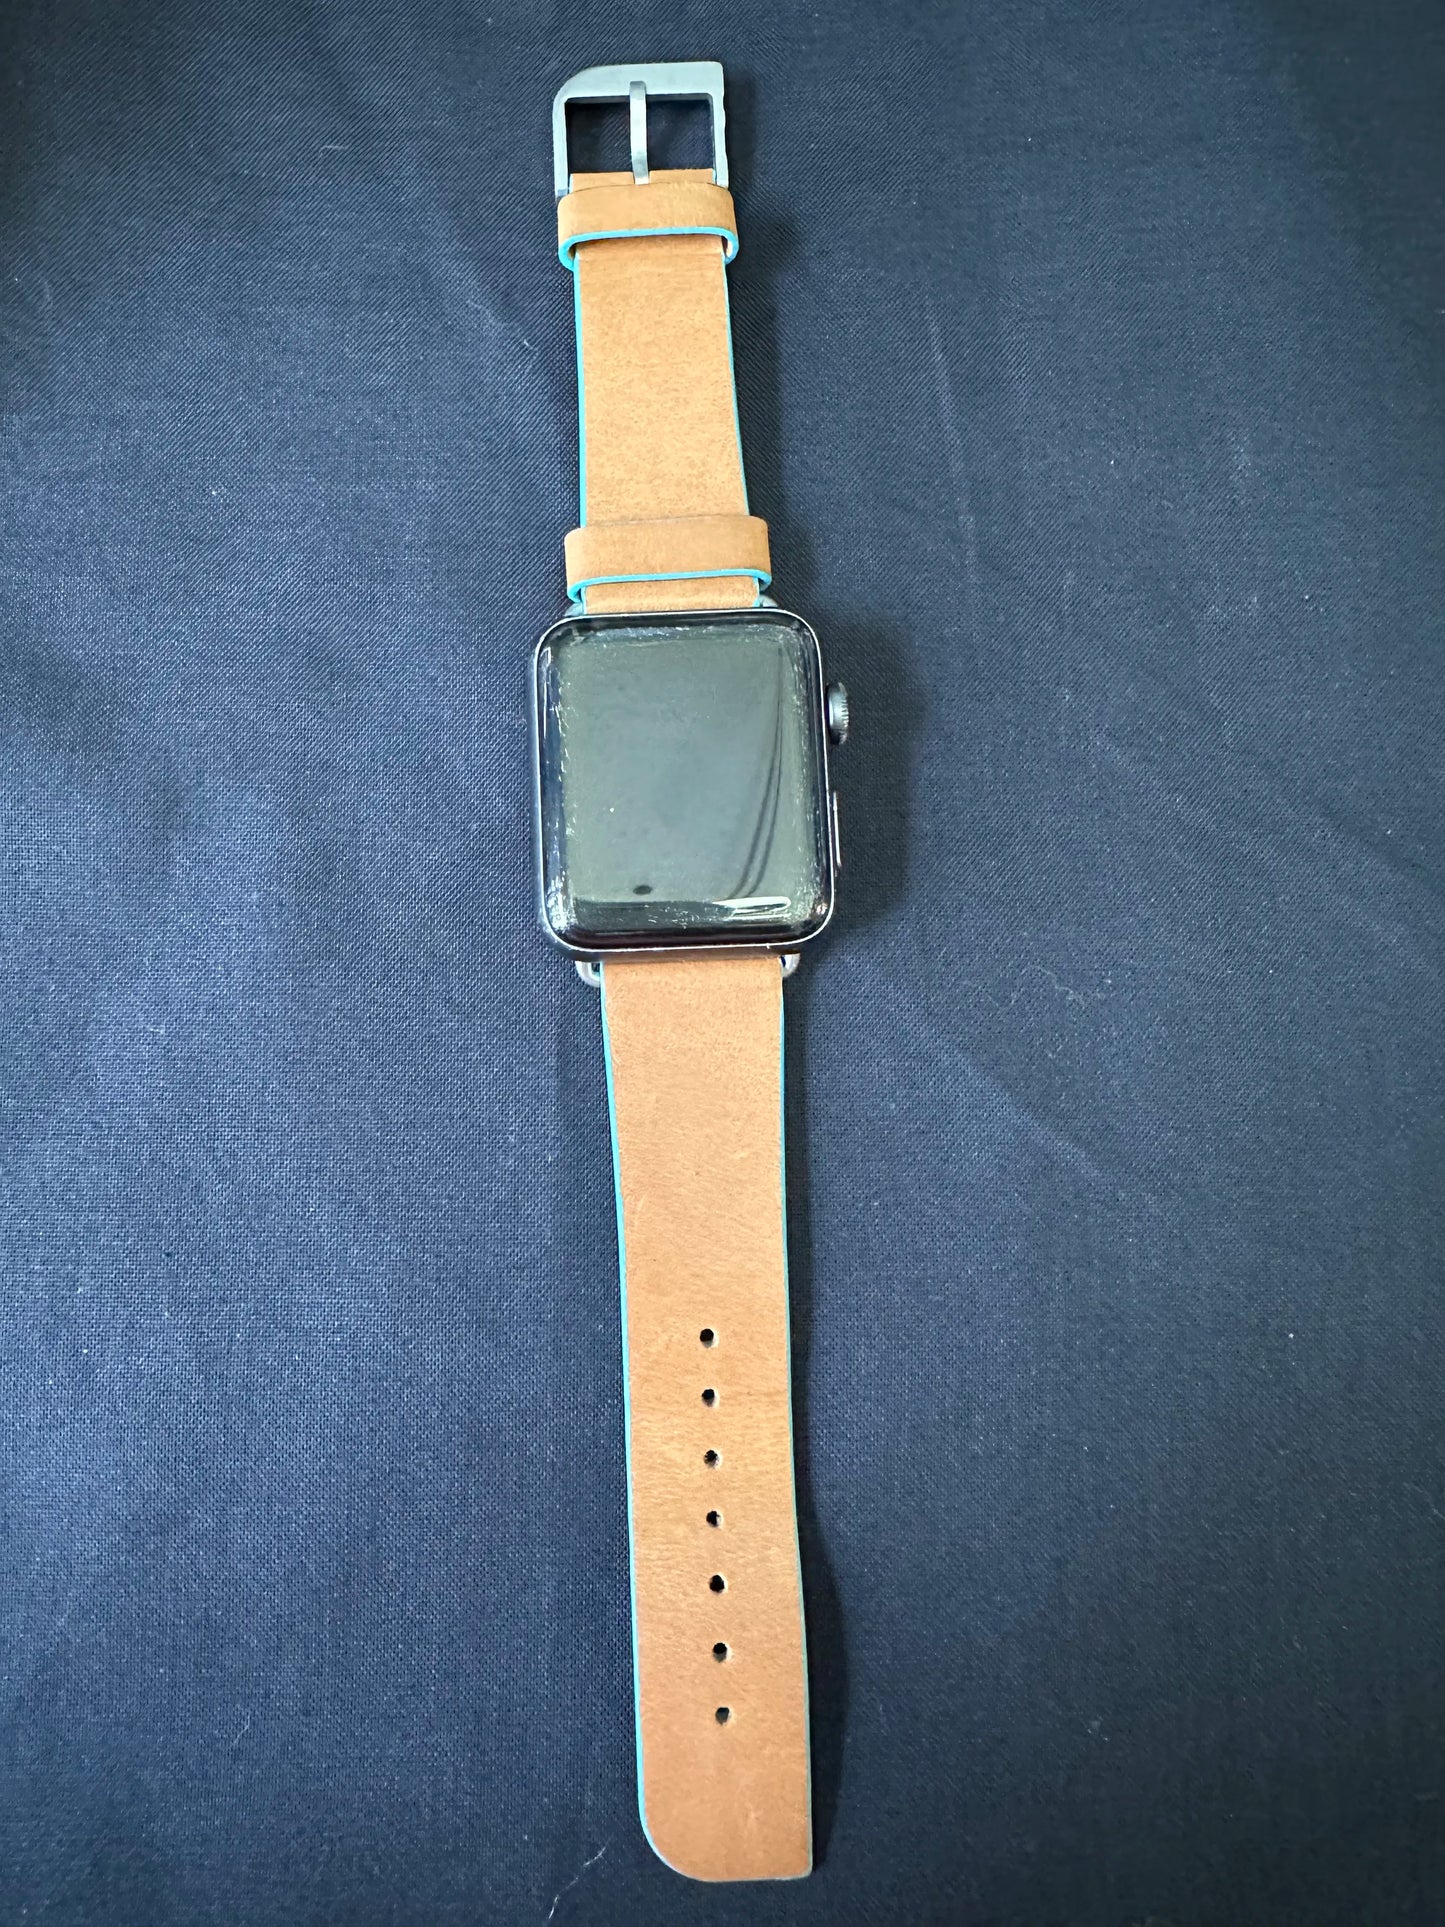 Apple Watch Series 3 - 42mm LTE